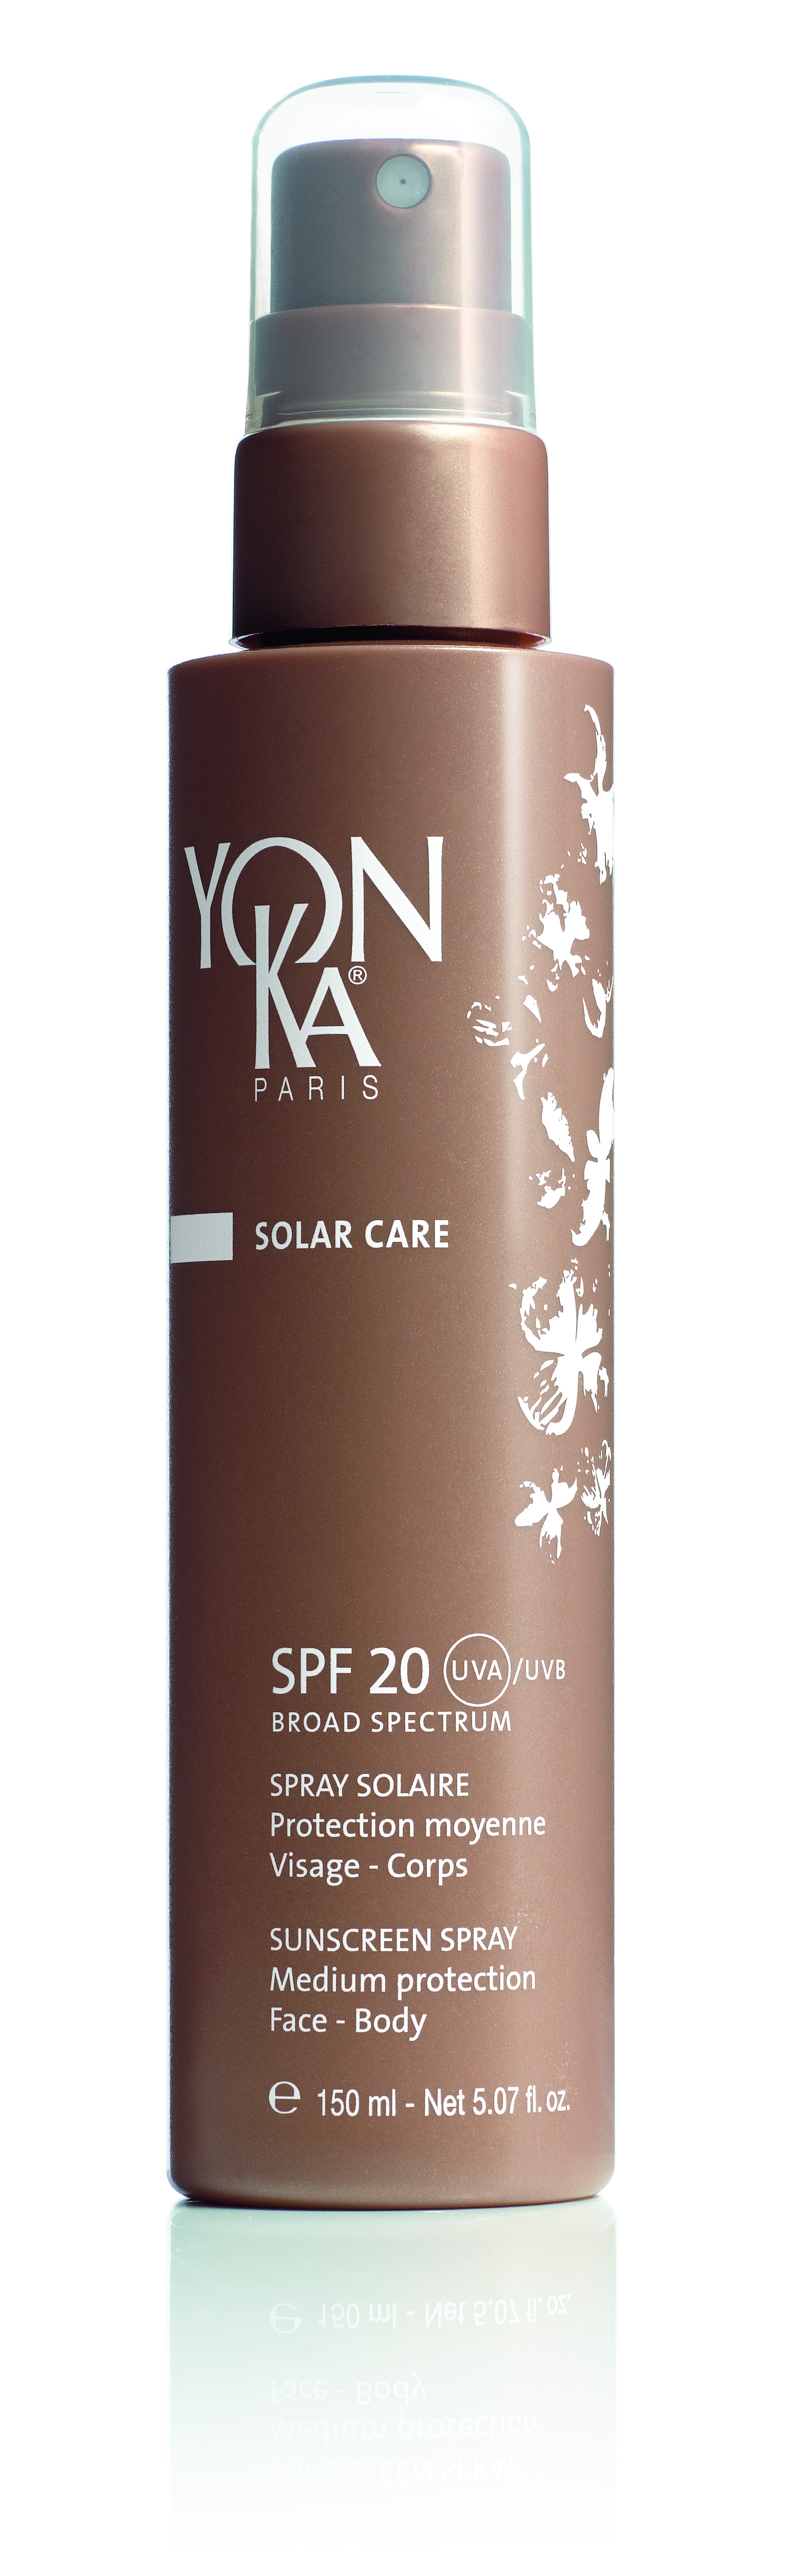 YON KA Спрей для защиты от солнца SPF 20 / SOLAR CARE 150 мл